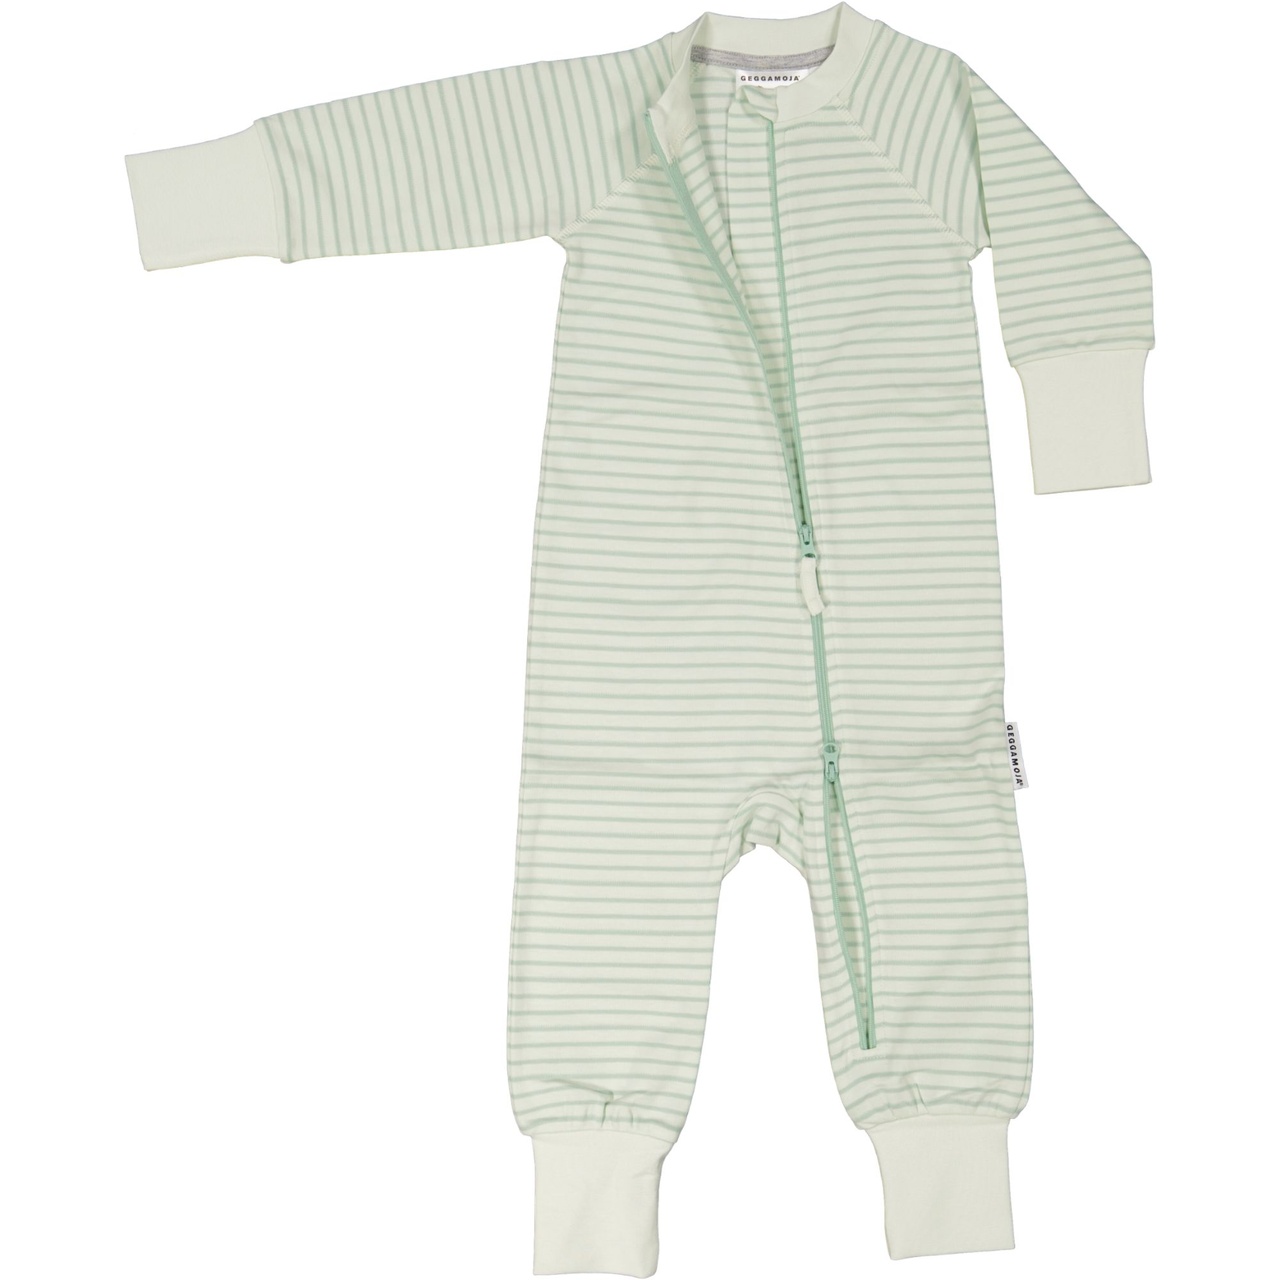 Baby pyjamas L green/green